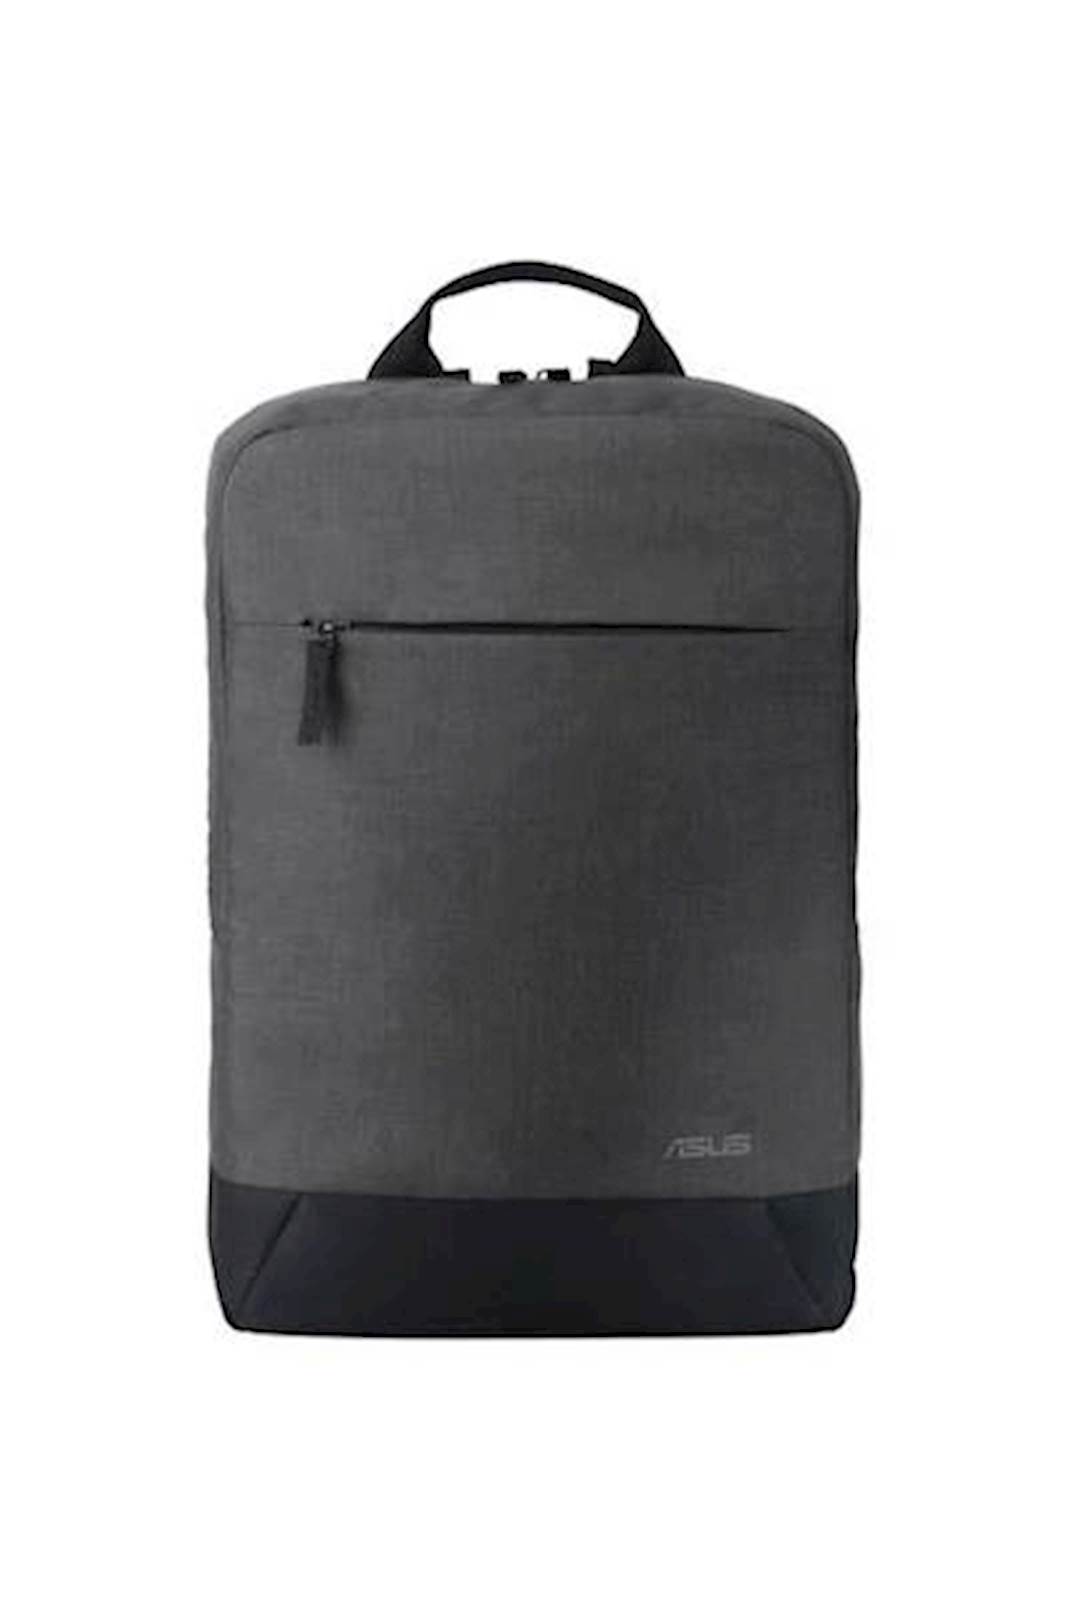 Ruksak Asus BP1504 Backpack, crni, za prenosnike do 15,6